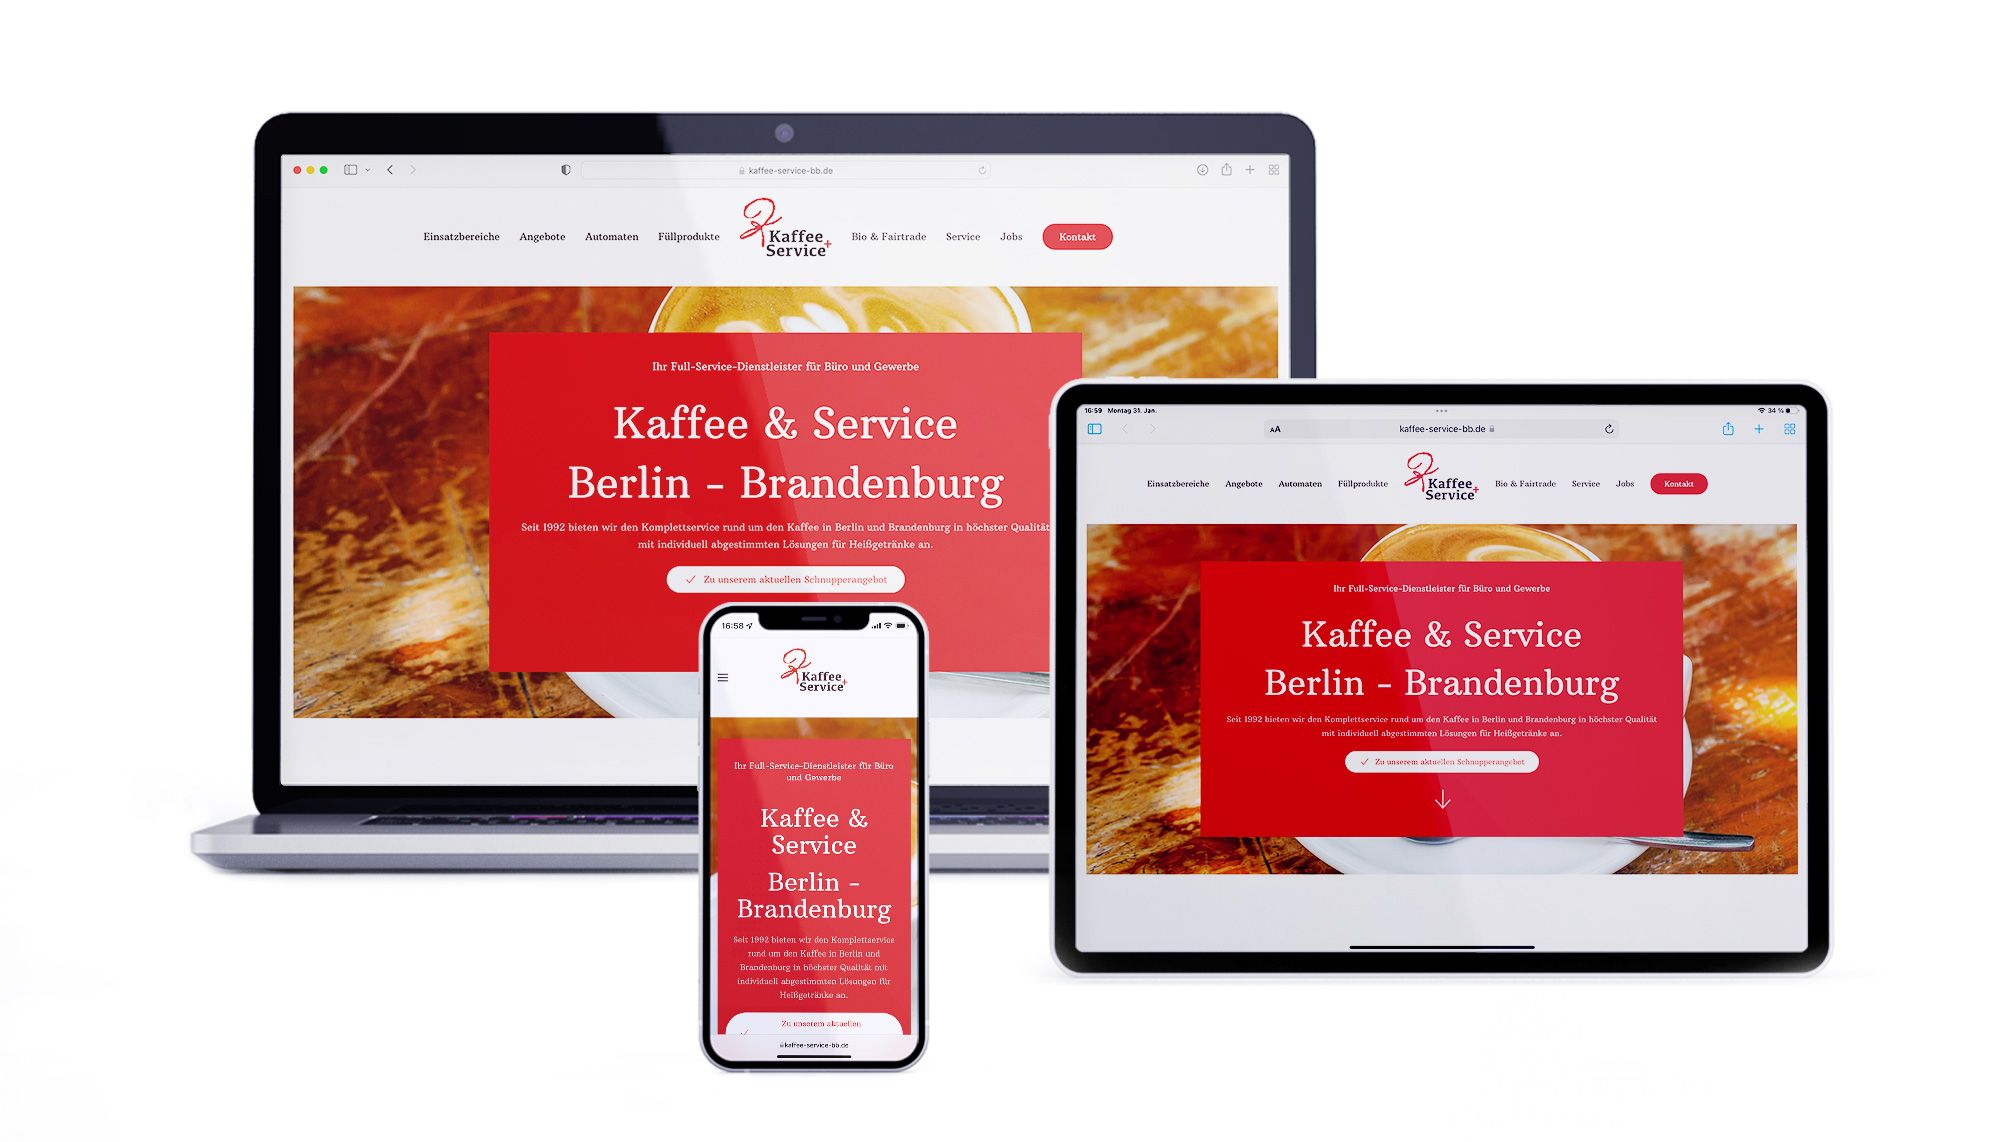 Kaffee & Service Berlin - Brandenburg